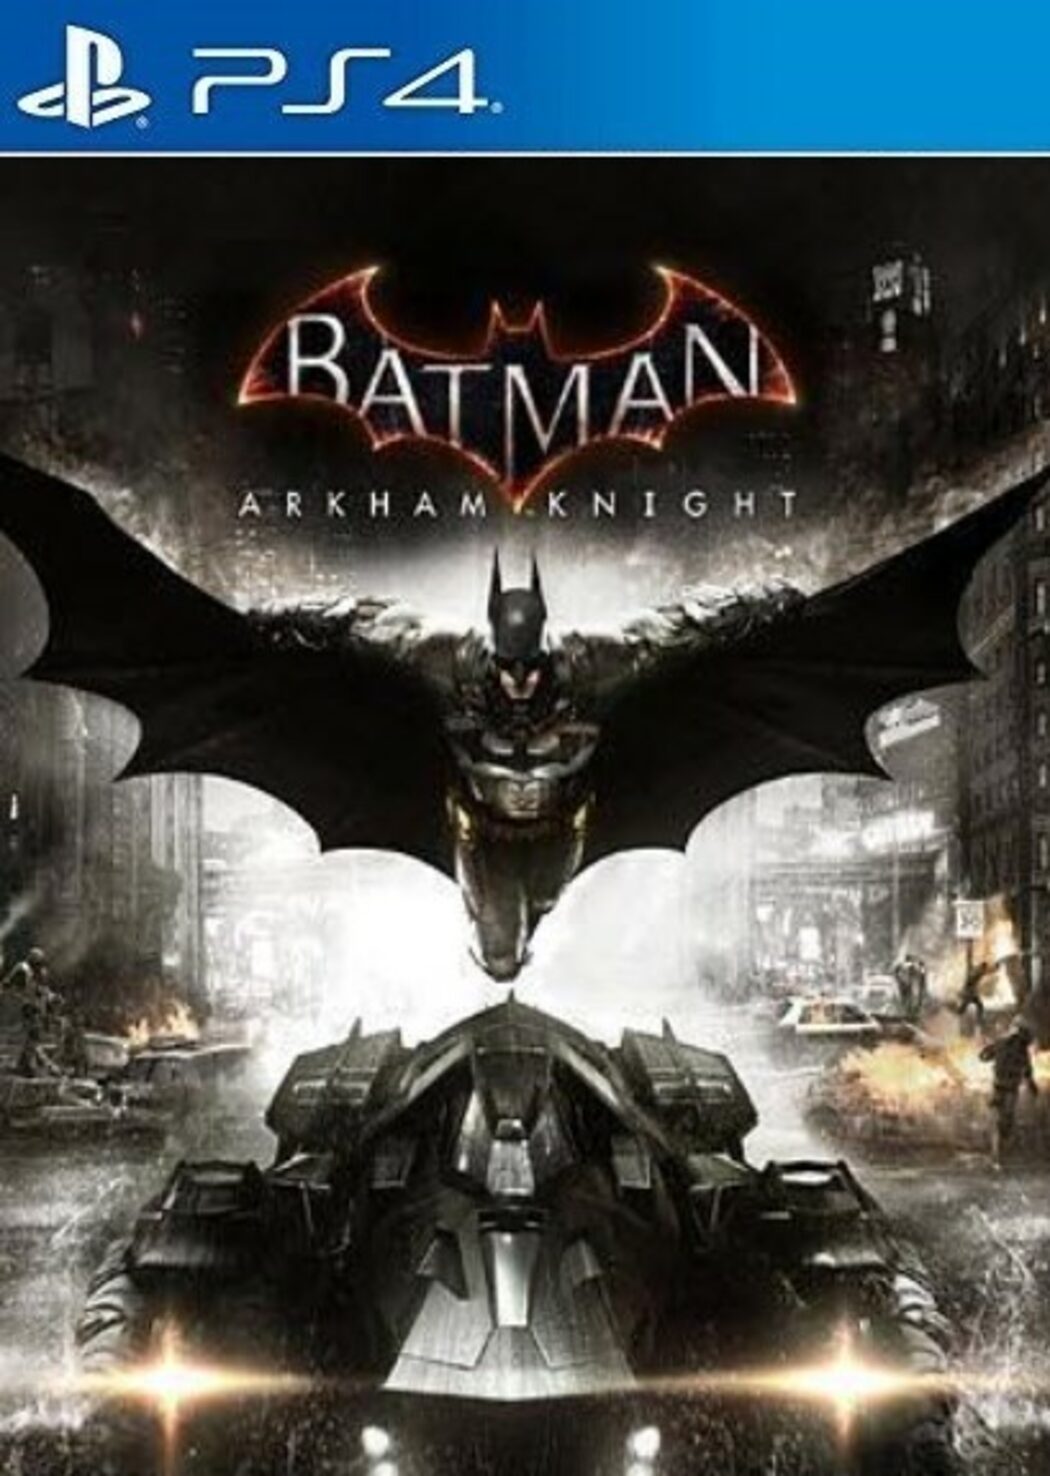 Buy Batman Arkham Knight PSN Key for Cheaper Price! | ENEBA